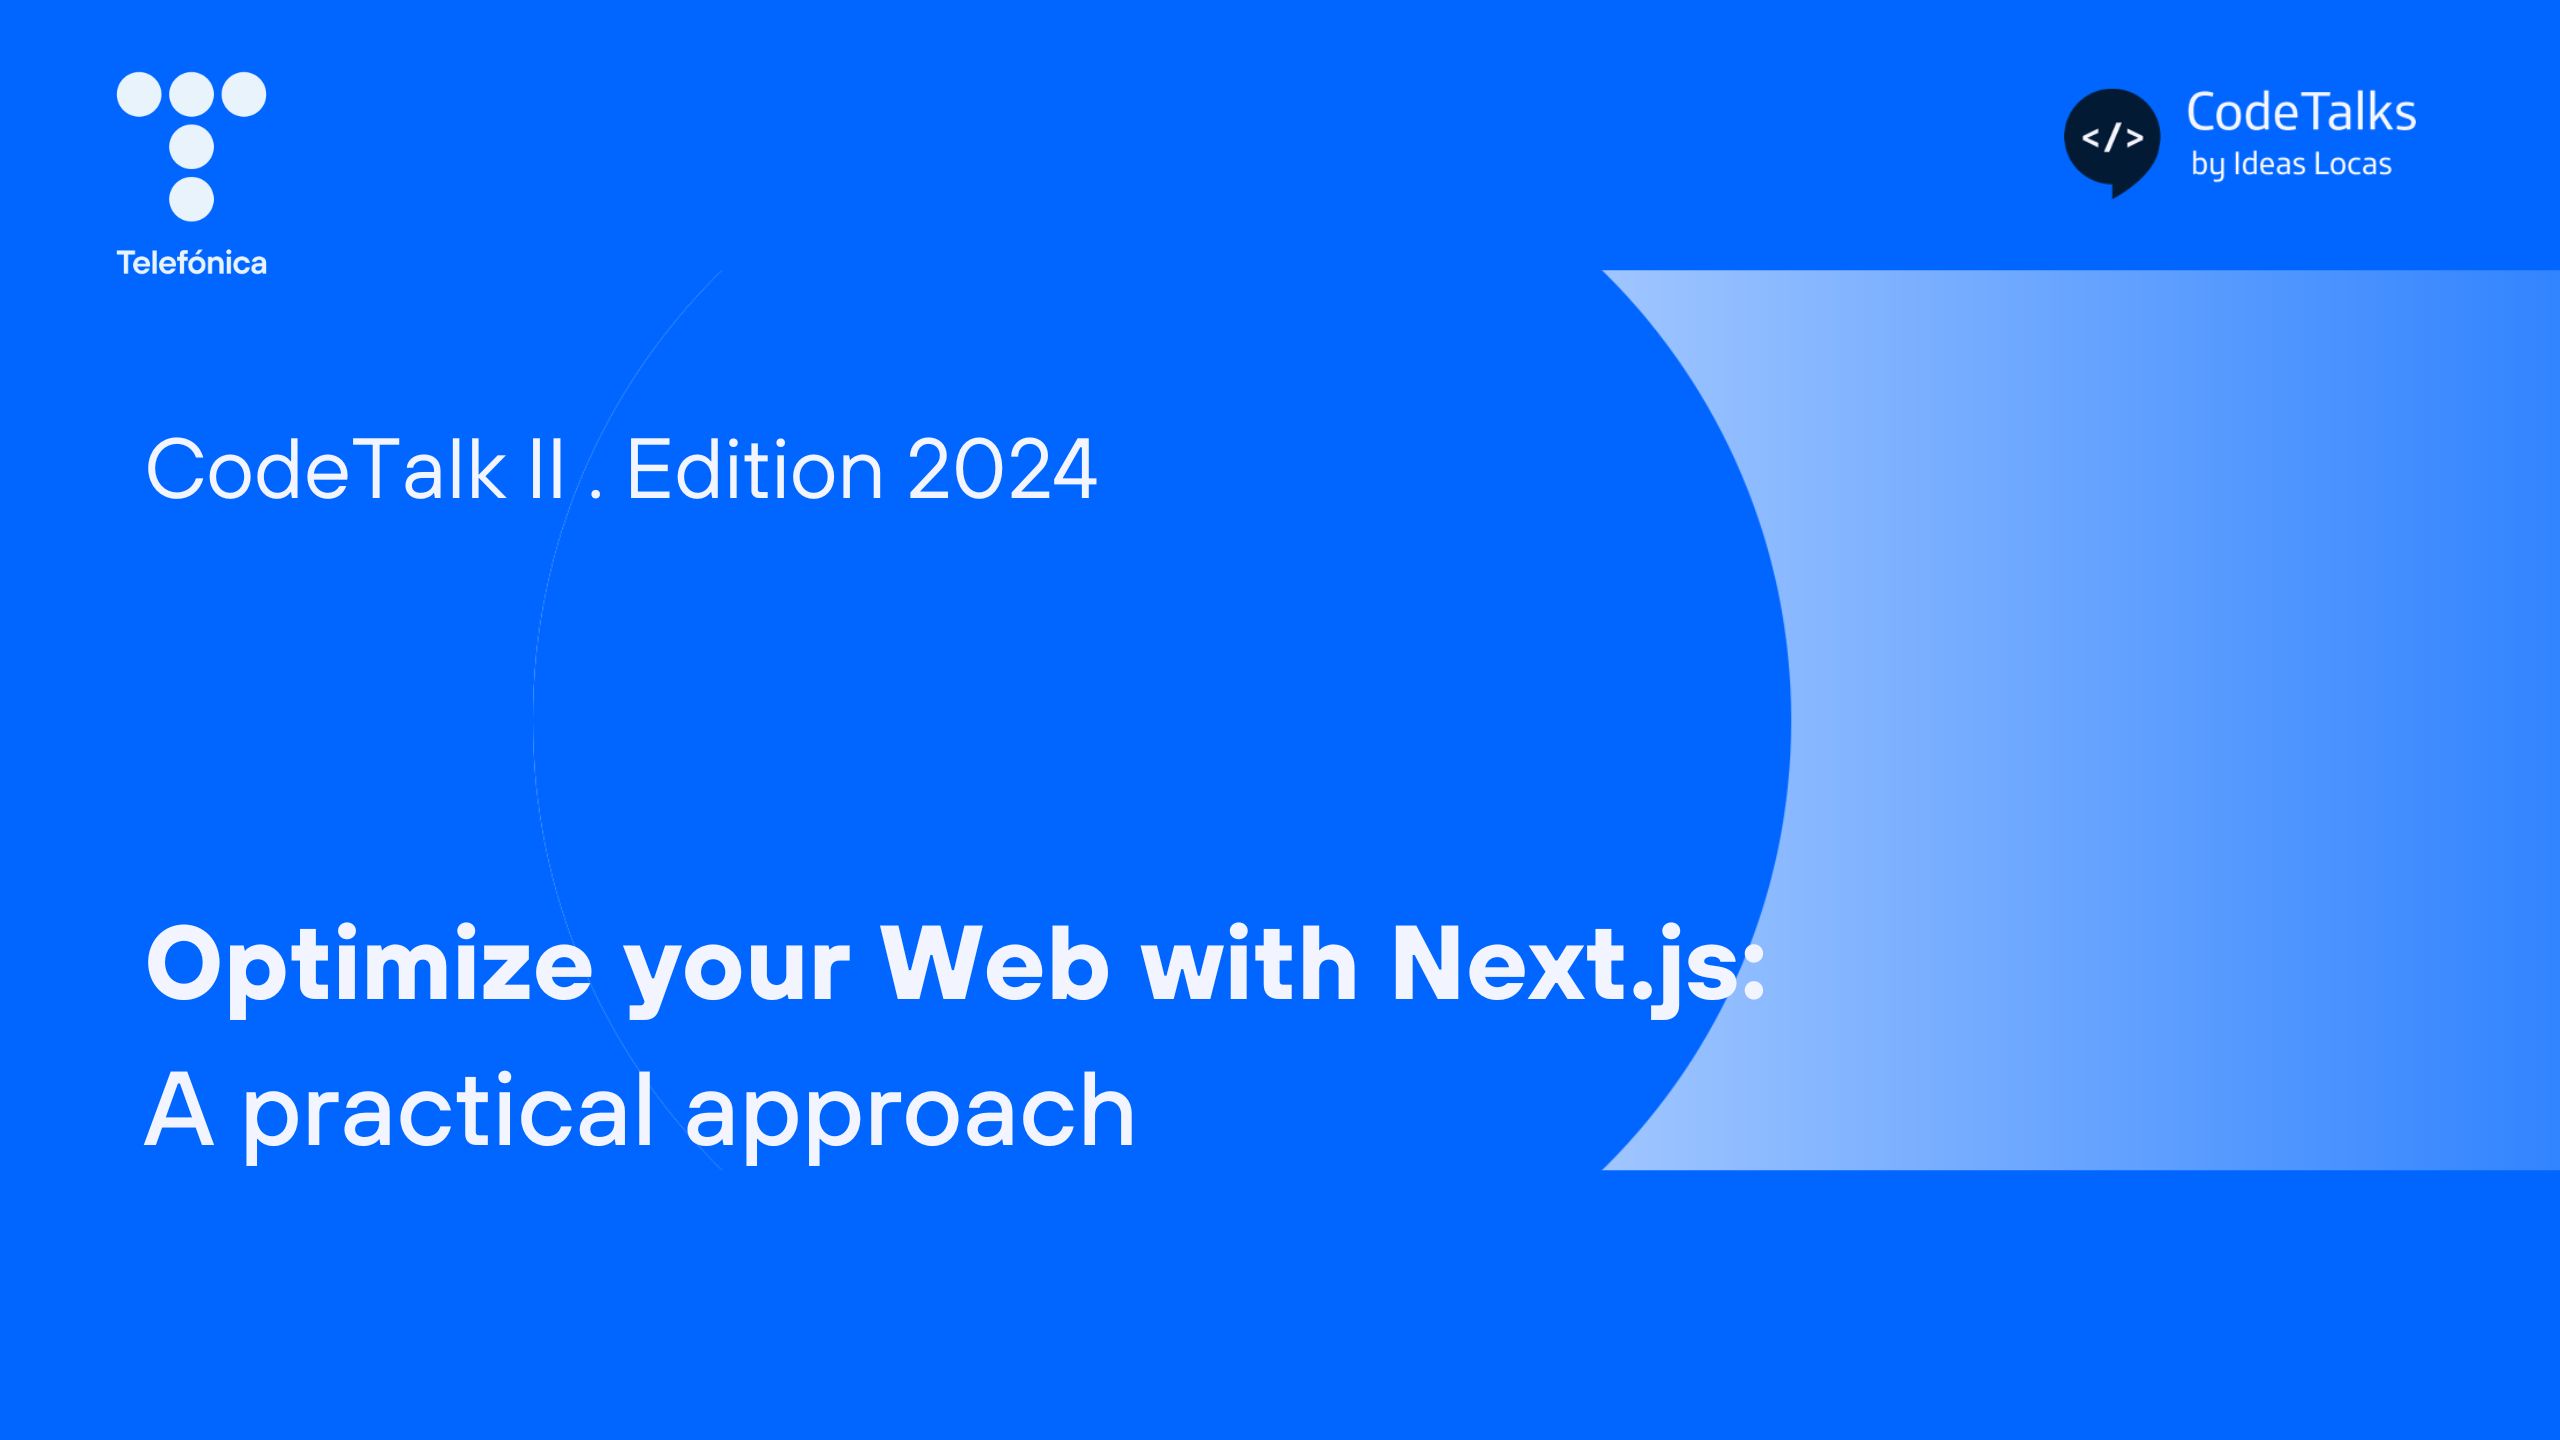 Optimize your Web with Next.js